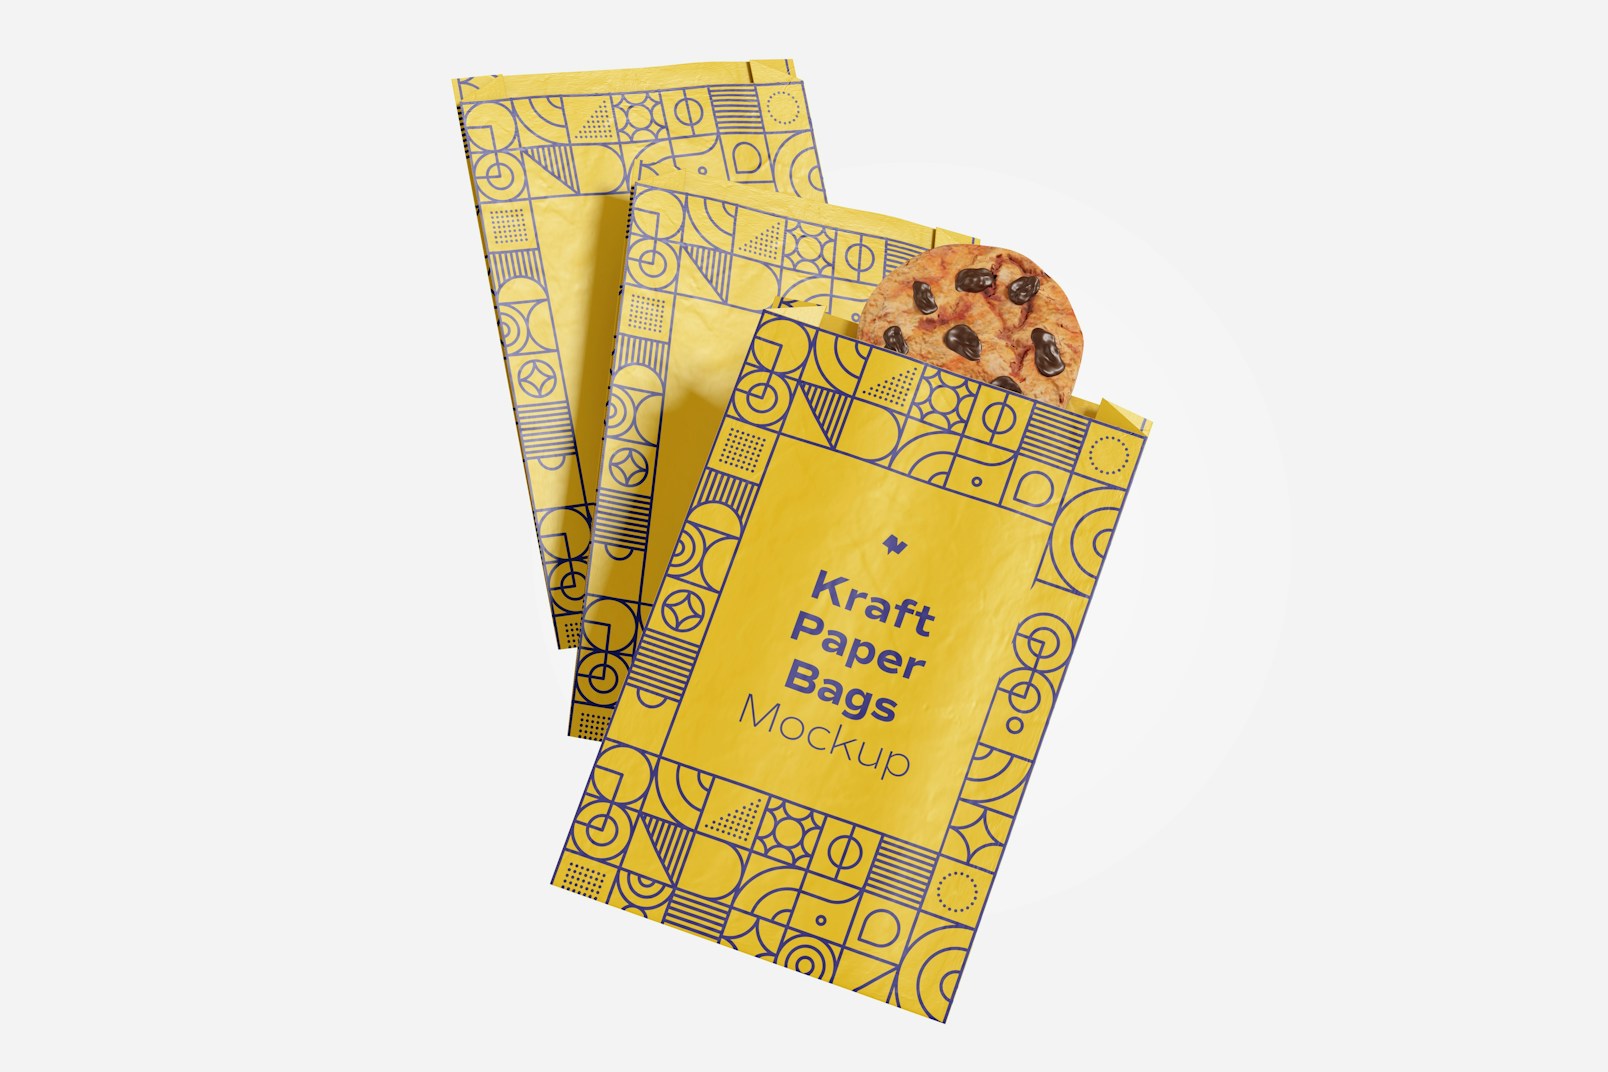 Kraft Paper Bag With Cookie Mockup, Floating